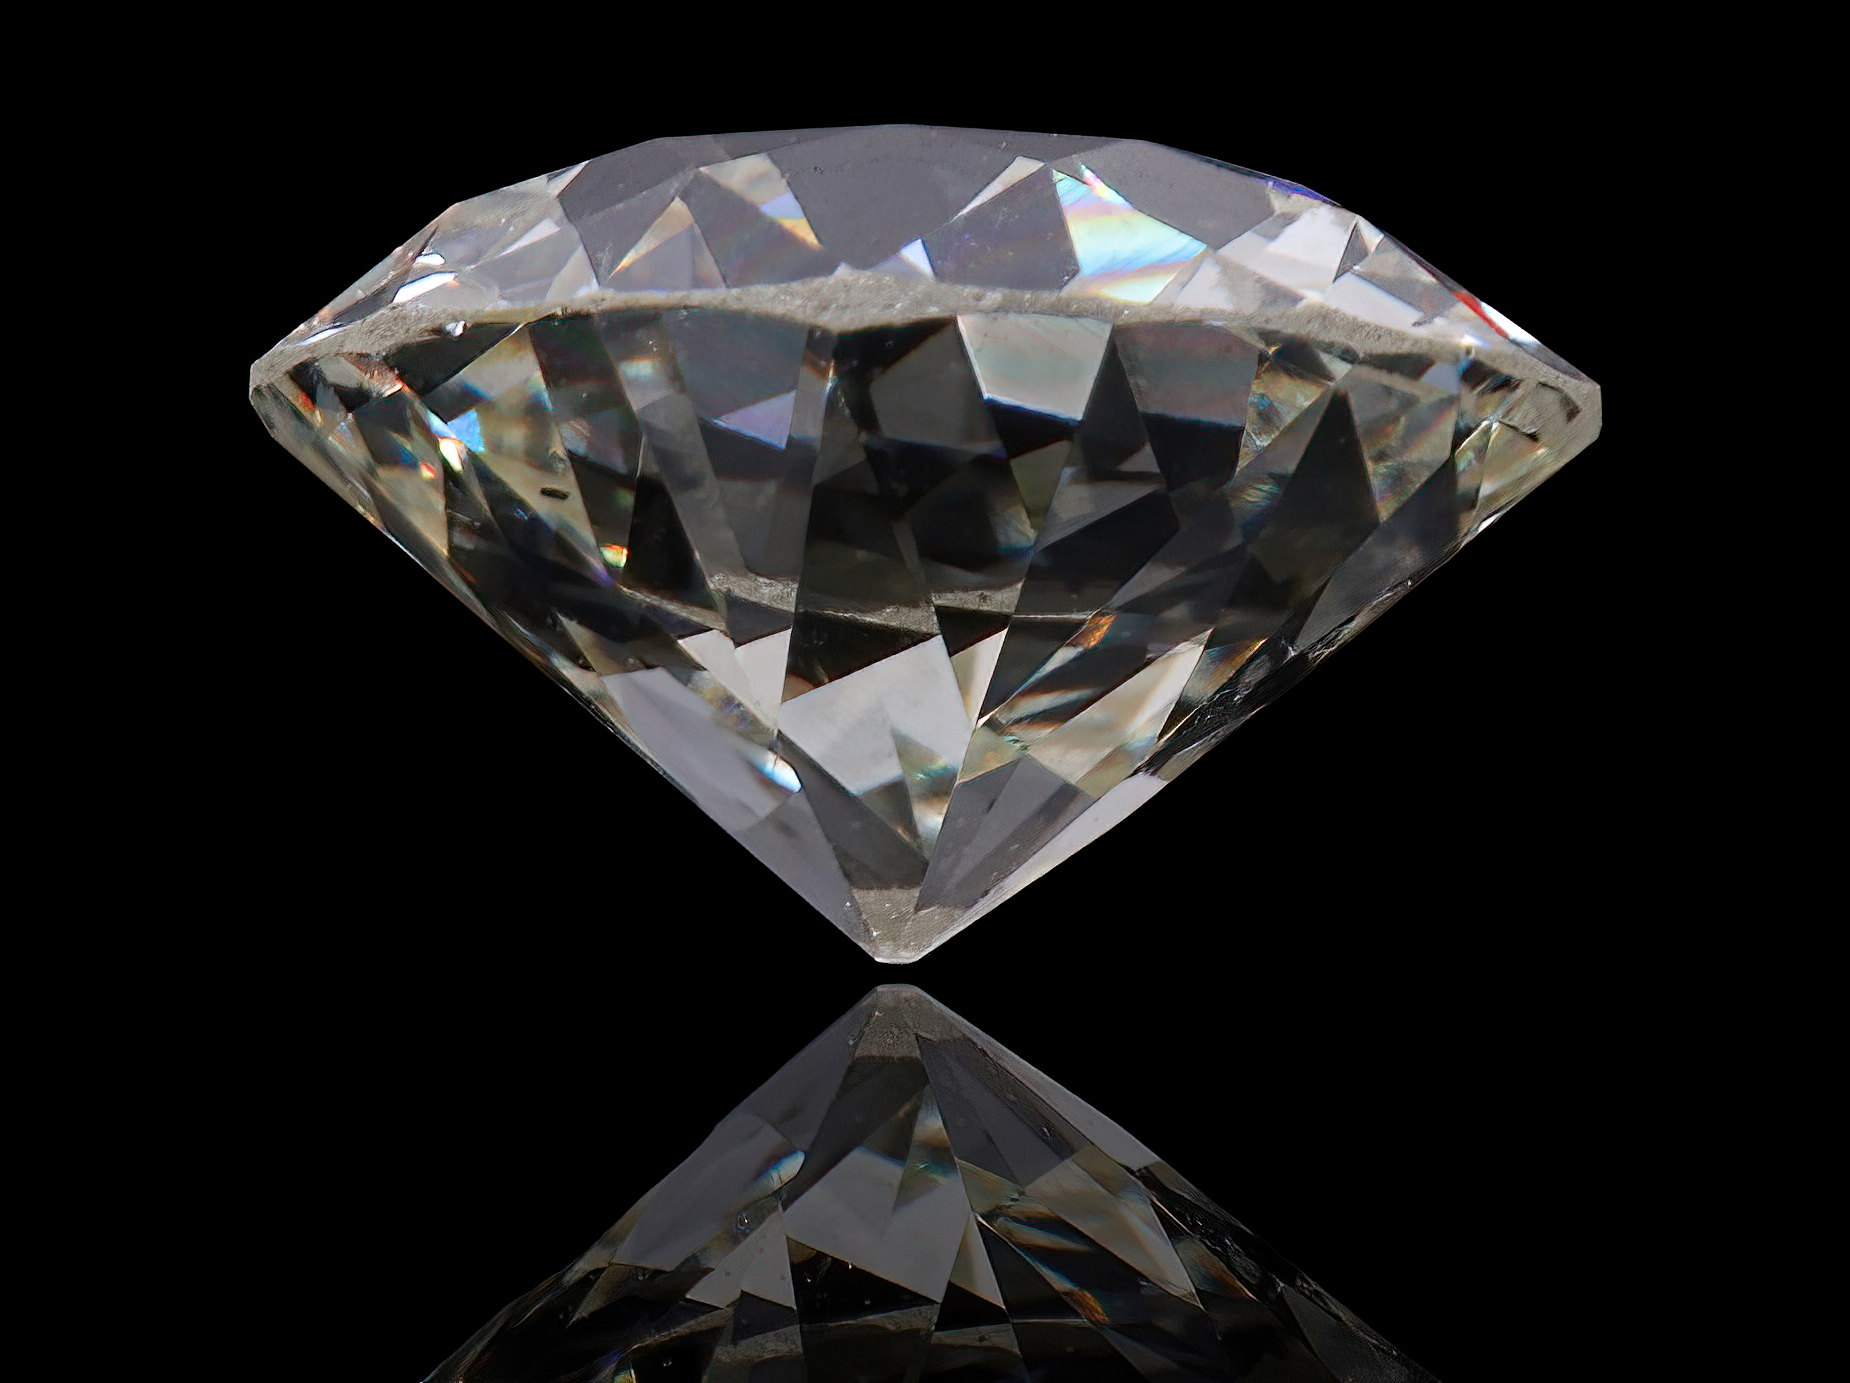 14K White Gold Diamond Pendant